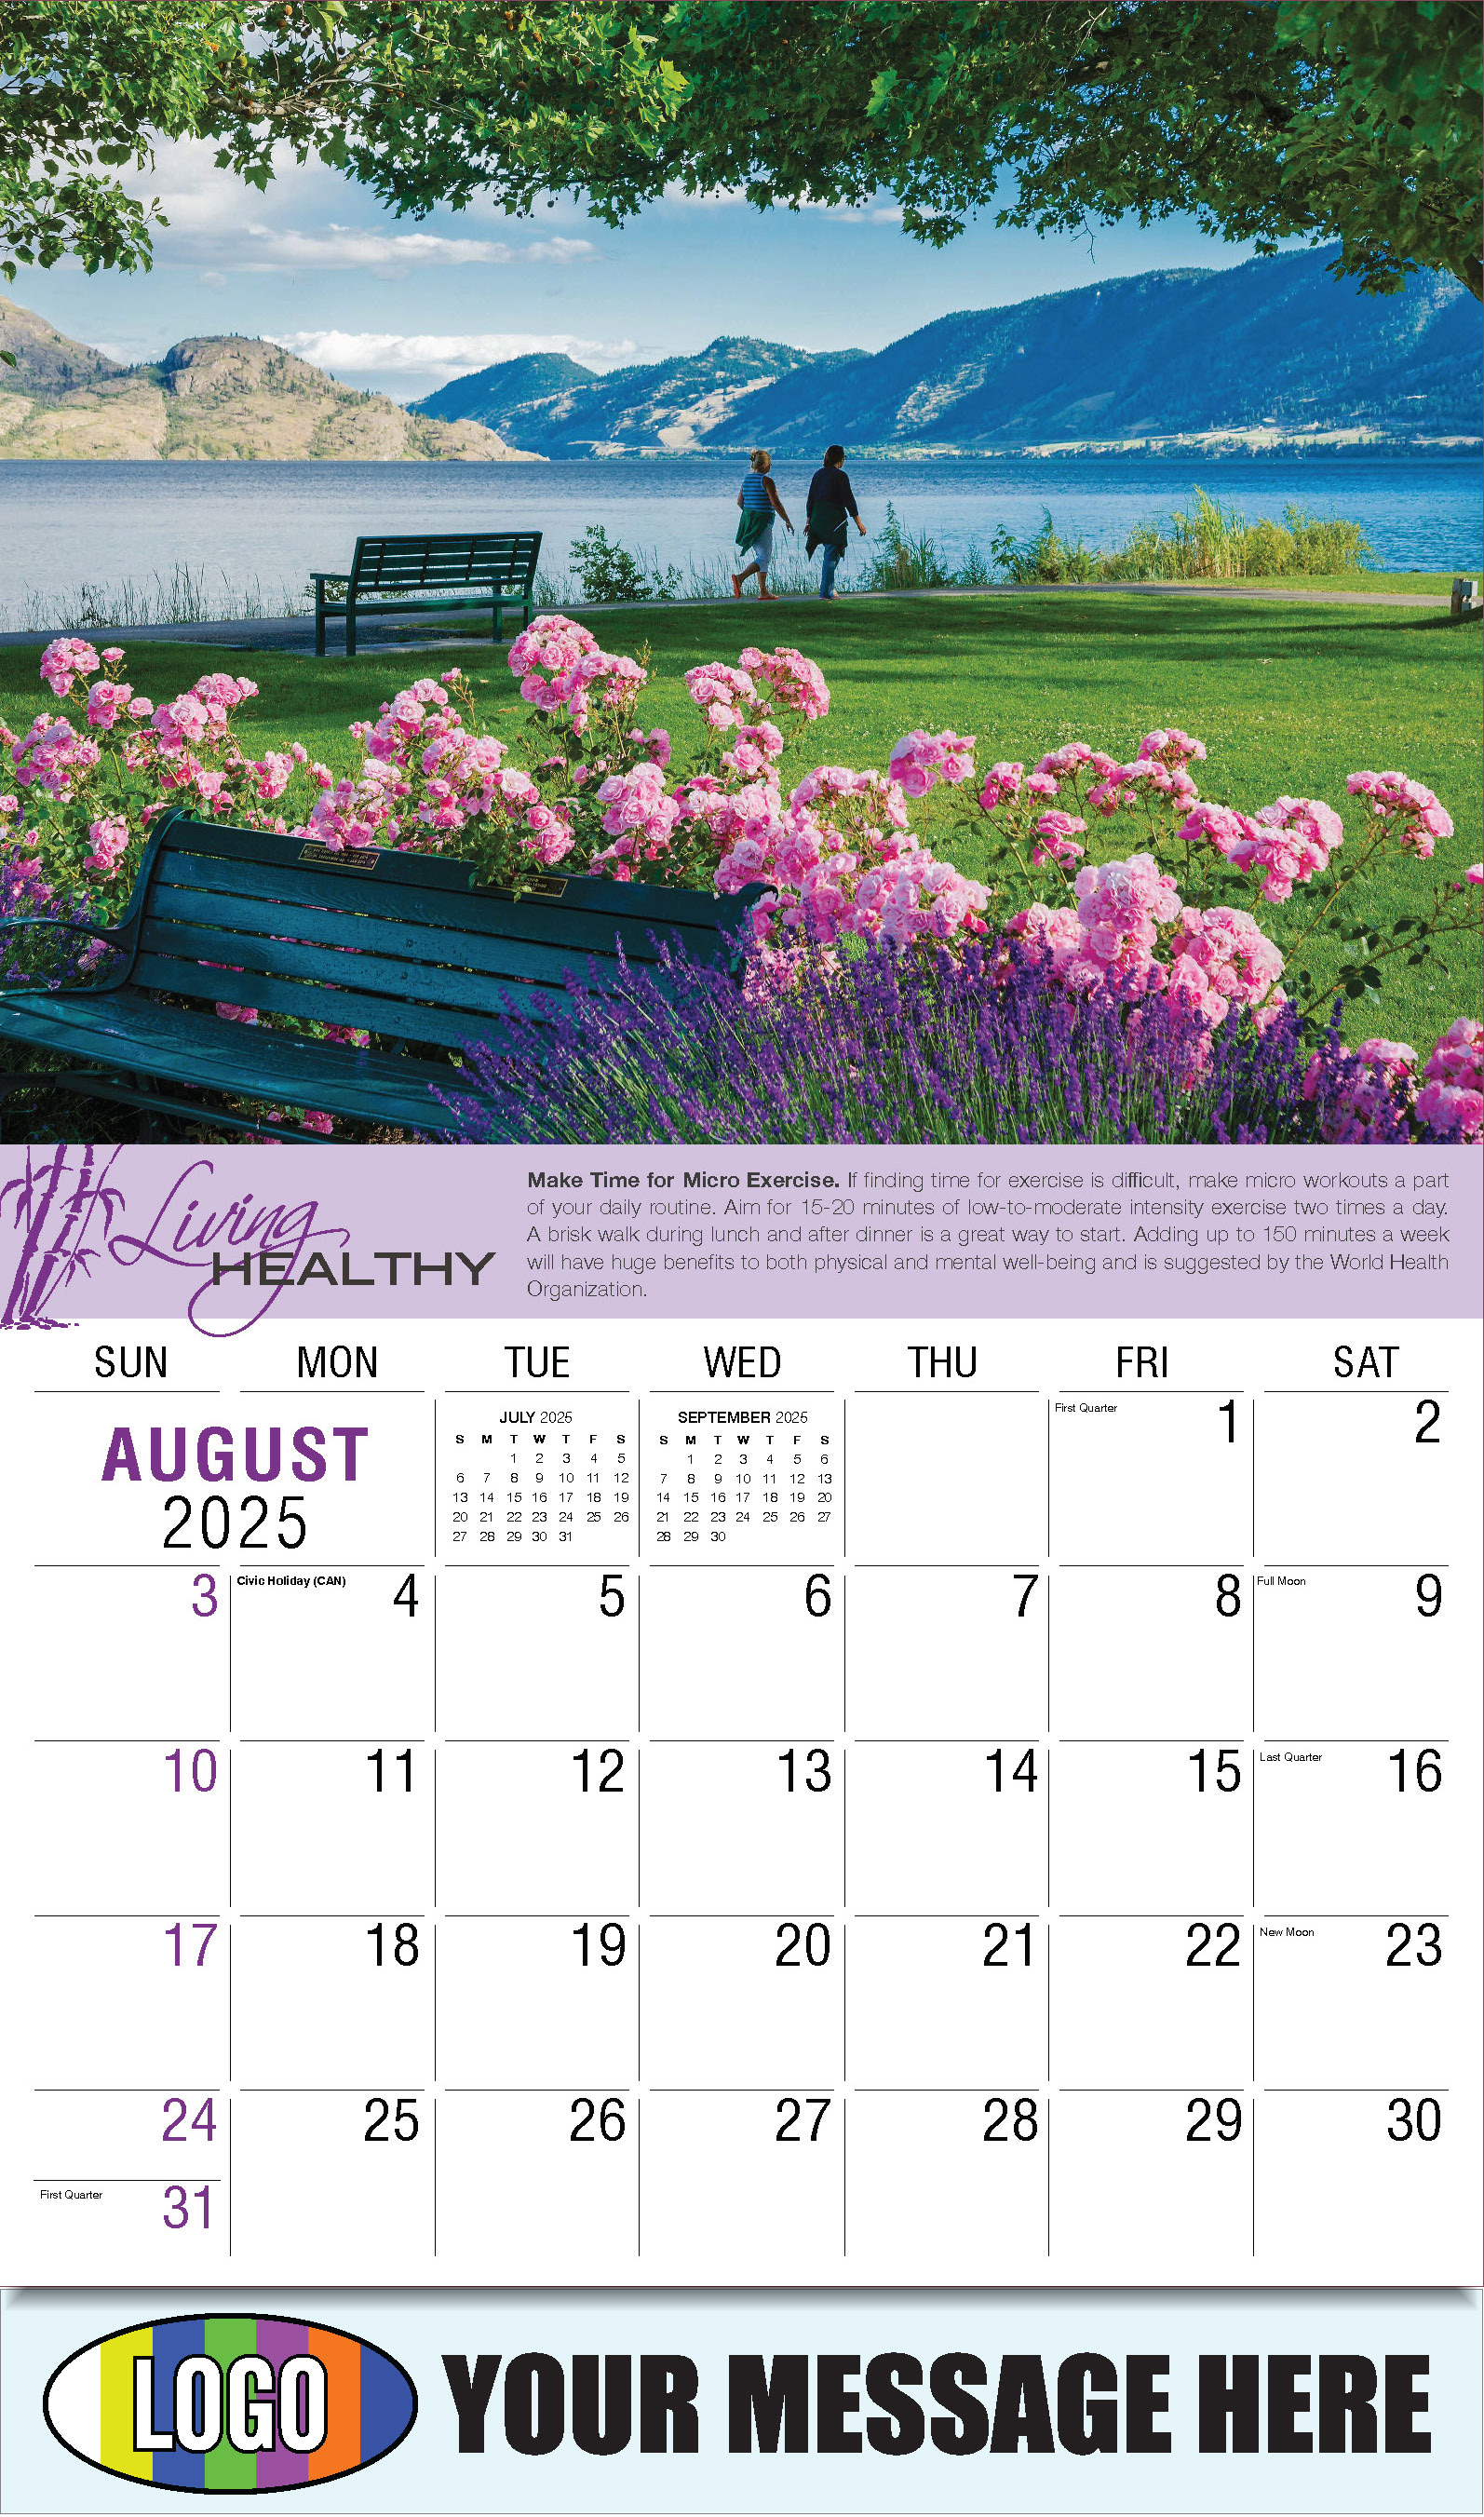 Living Healthy 2025 Business Promotional Calendar - August